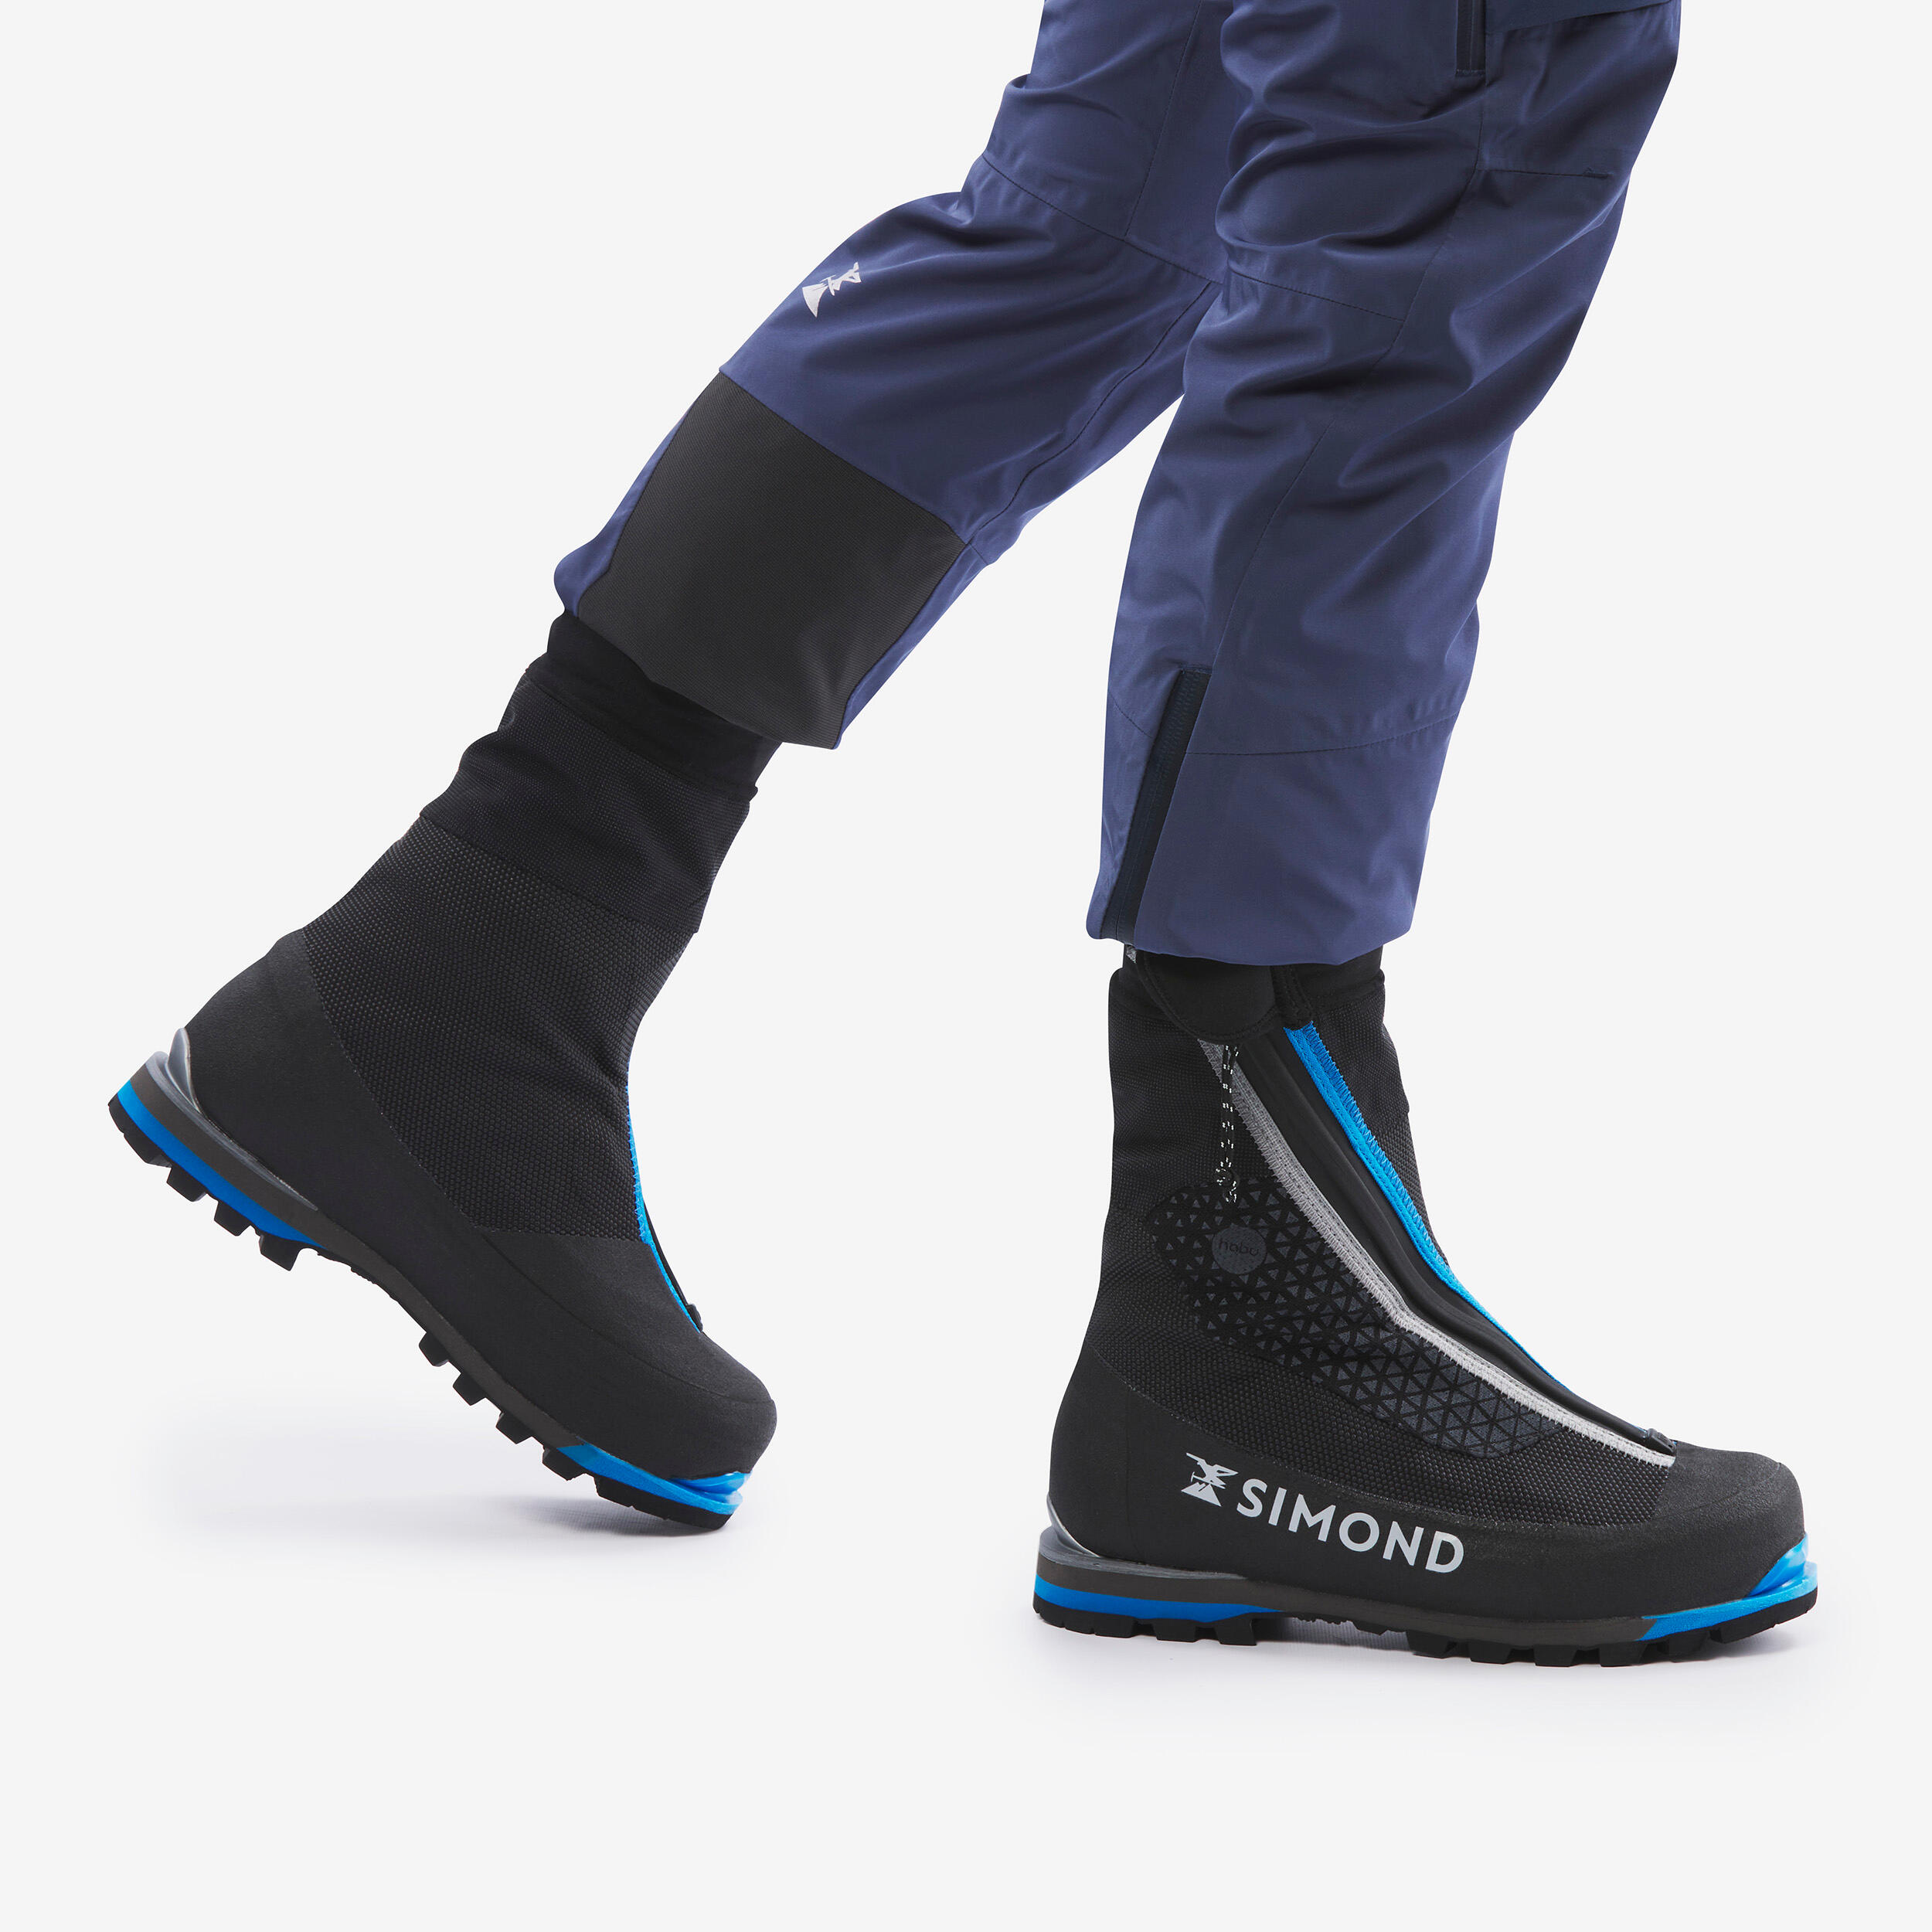 All-season mountaineering boots - ICE Blue/Black 8/12